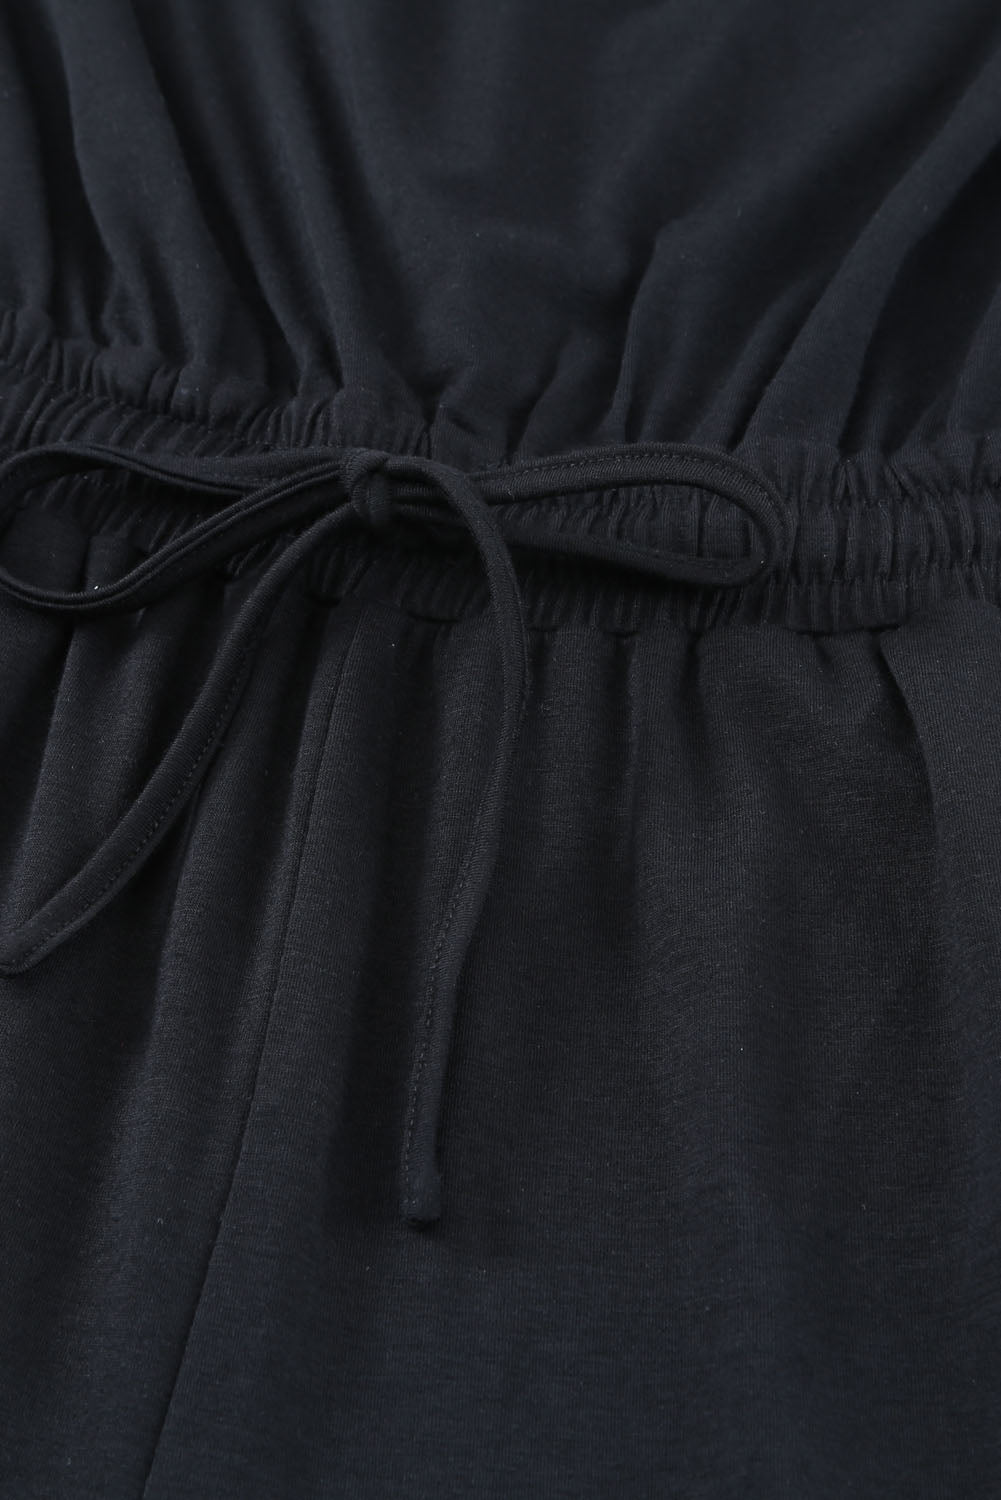 Black Drawstring Waist Spaghetti Straps Jumpsuit Jumpsuits & Rompers JT's Designer Fashion